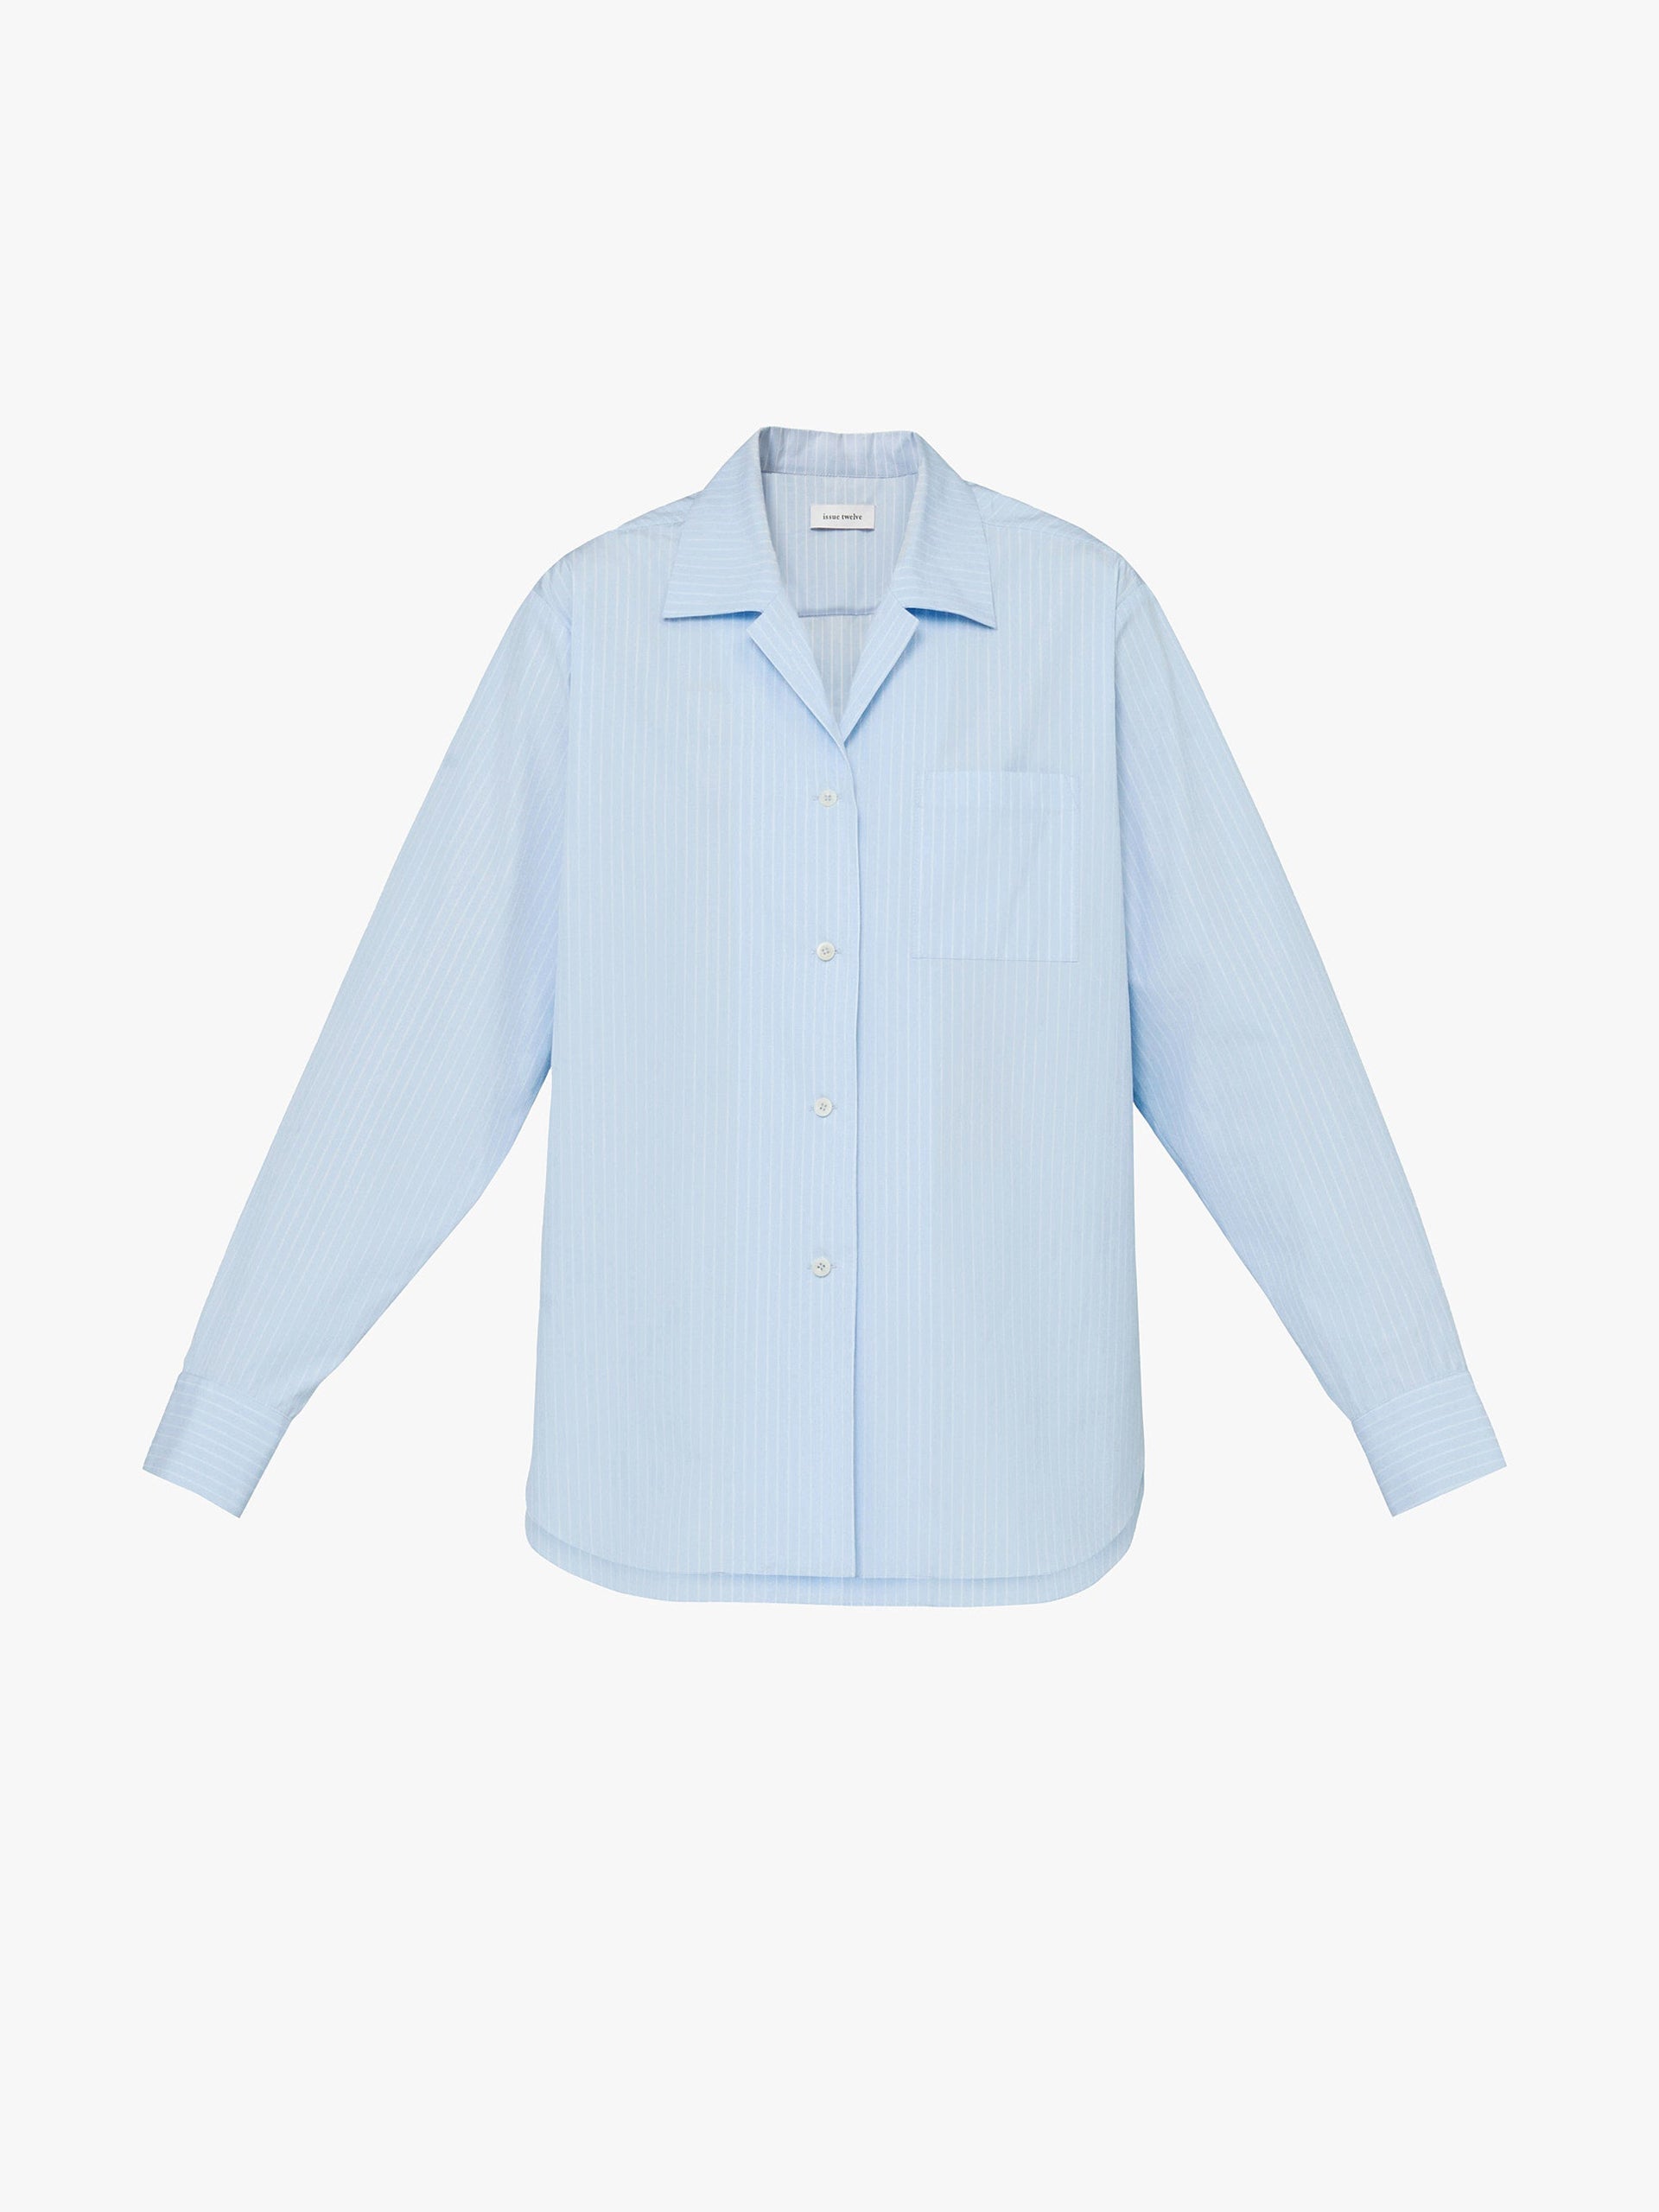 Milo blue organic cotton shirt - Collagerie.com